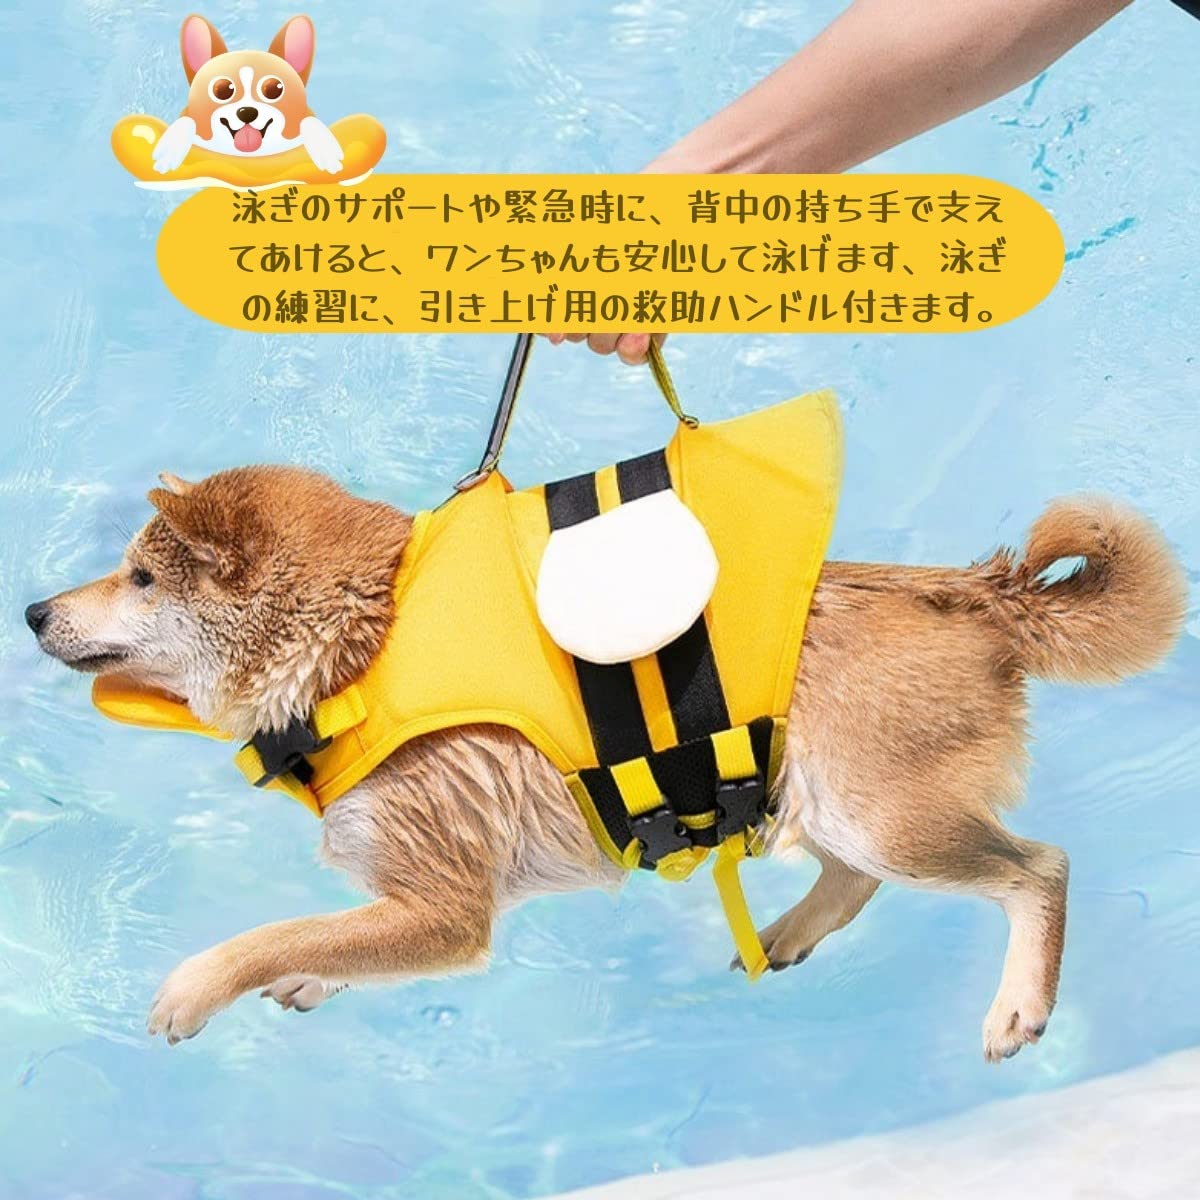 Little Bean ペット 犬用ライフジャケット 調節可能 高浮力 反射ライン 干しやすい 水泳救命胴衣 水遊び用 救命胴衣 犬の安全を守る 水泳の練習用品 小型犬 中型犬 (S)